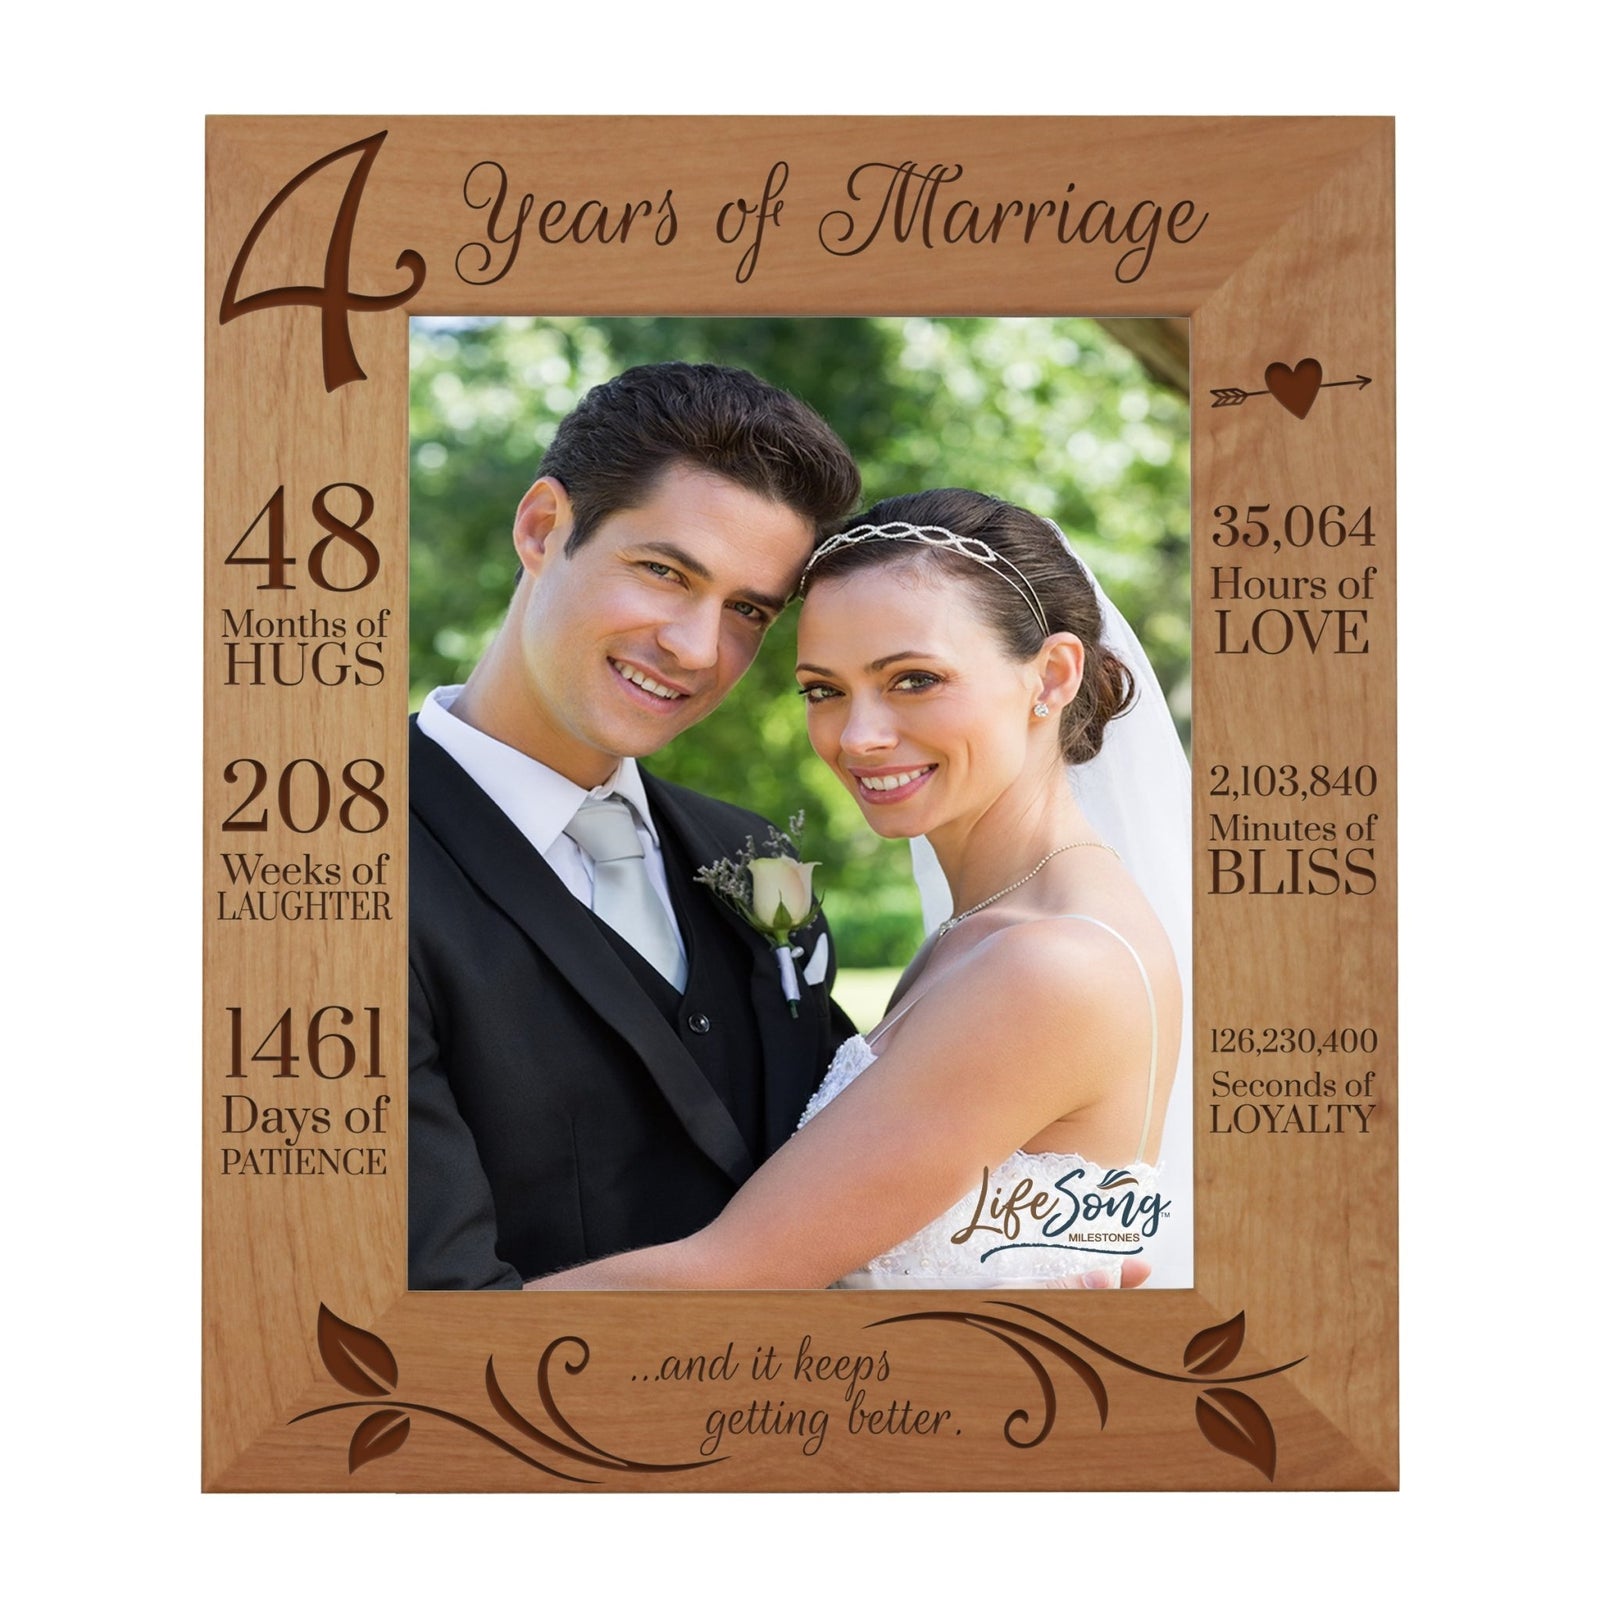 Lifesong Milestones Couples 4th Wedding Anniversary Photo Frame Home Decor Gift Ideas